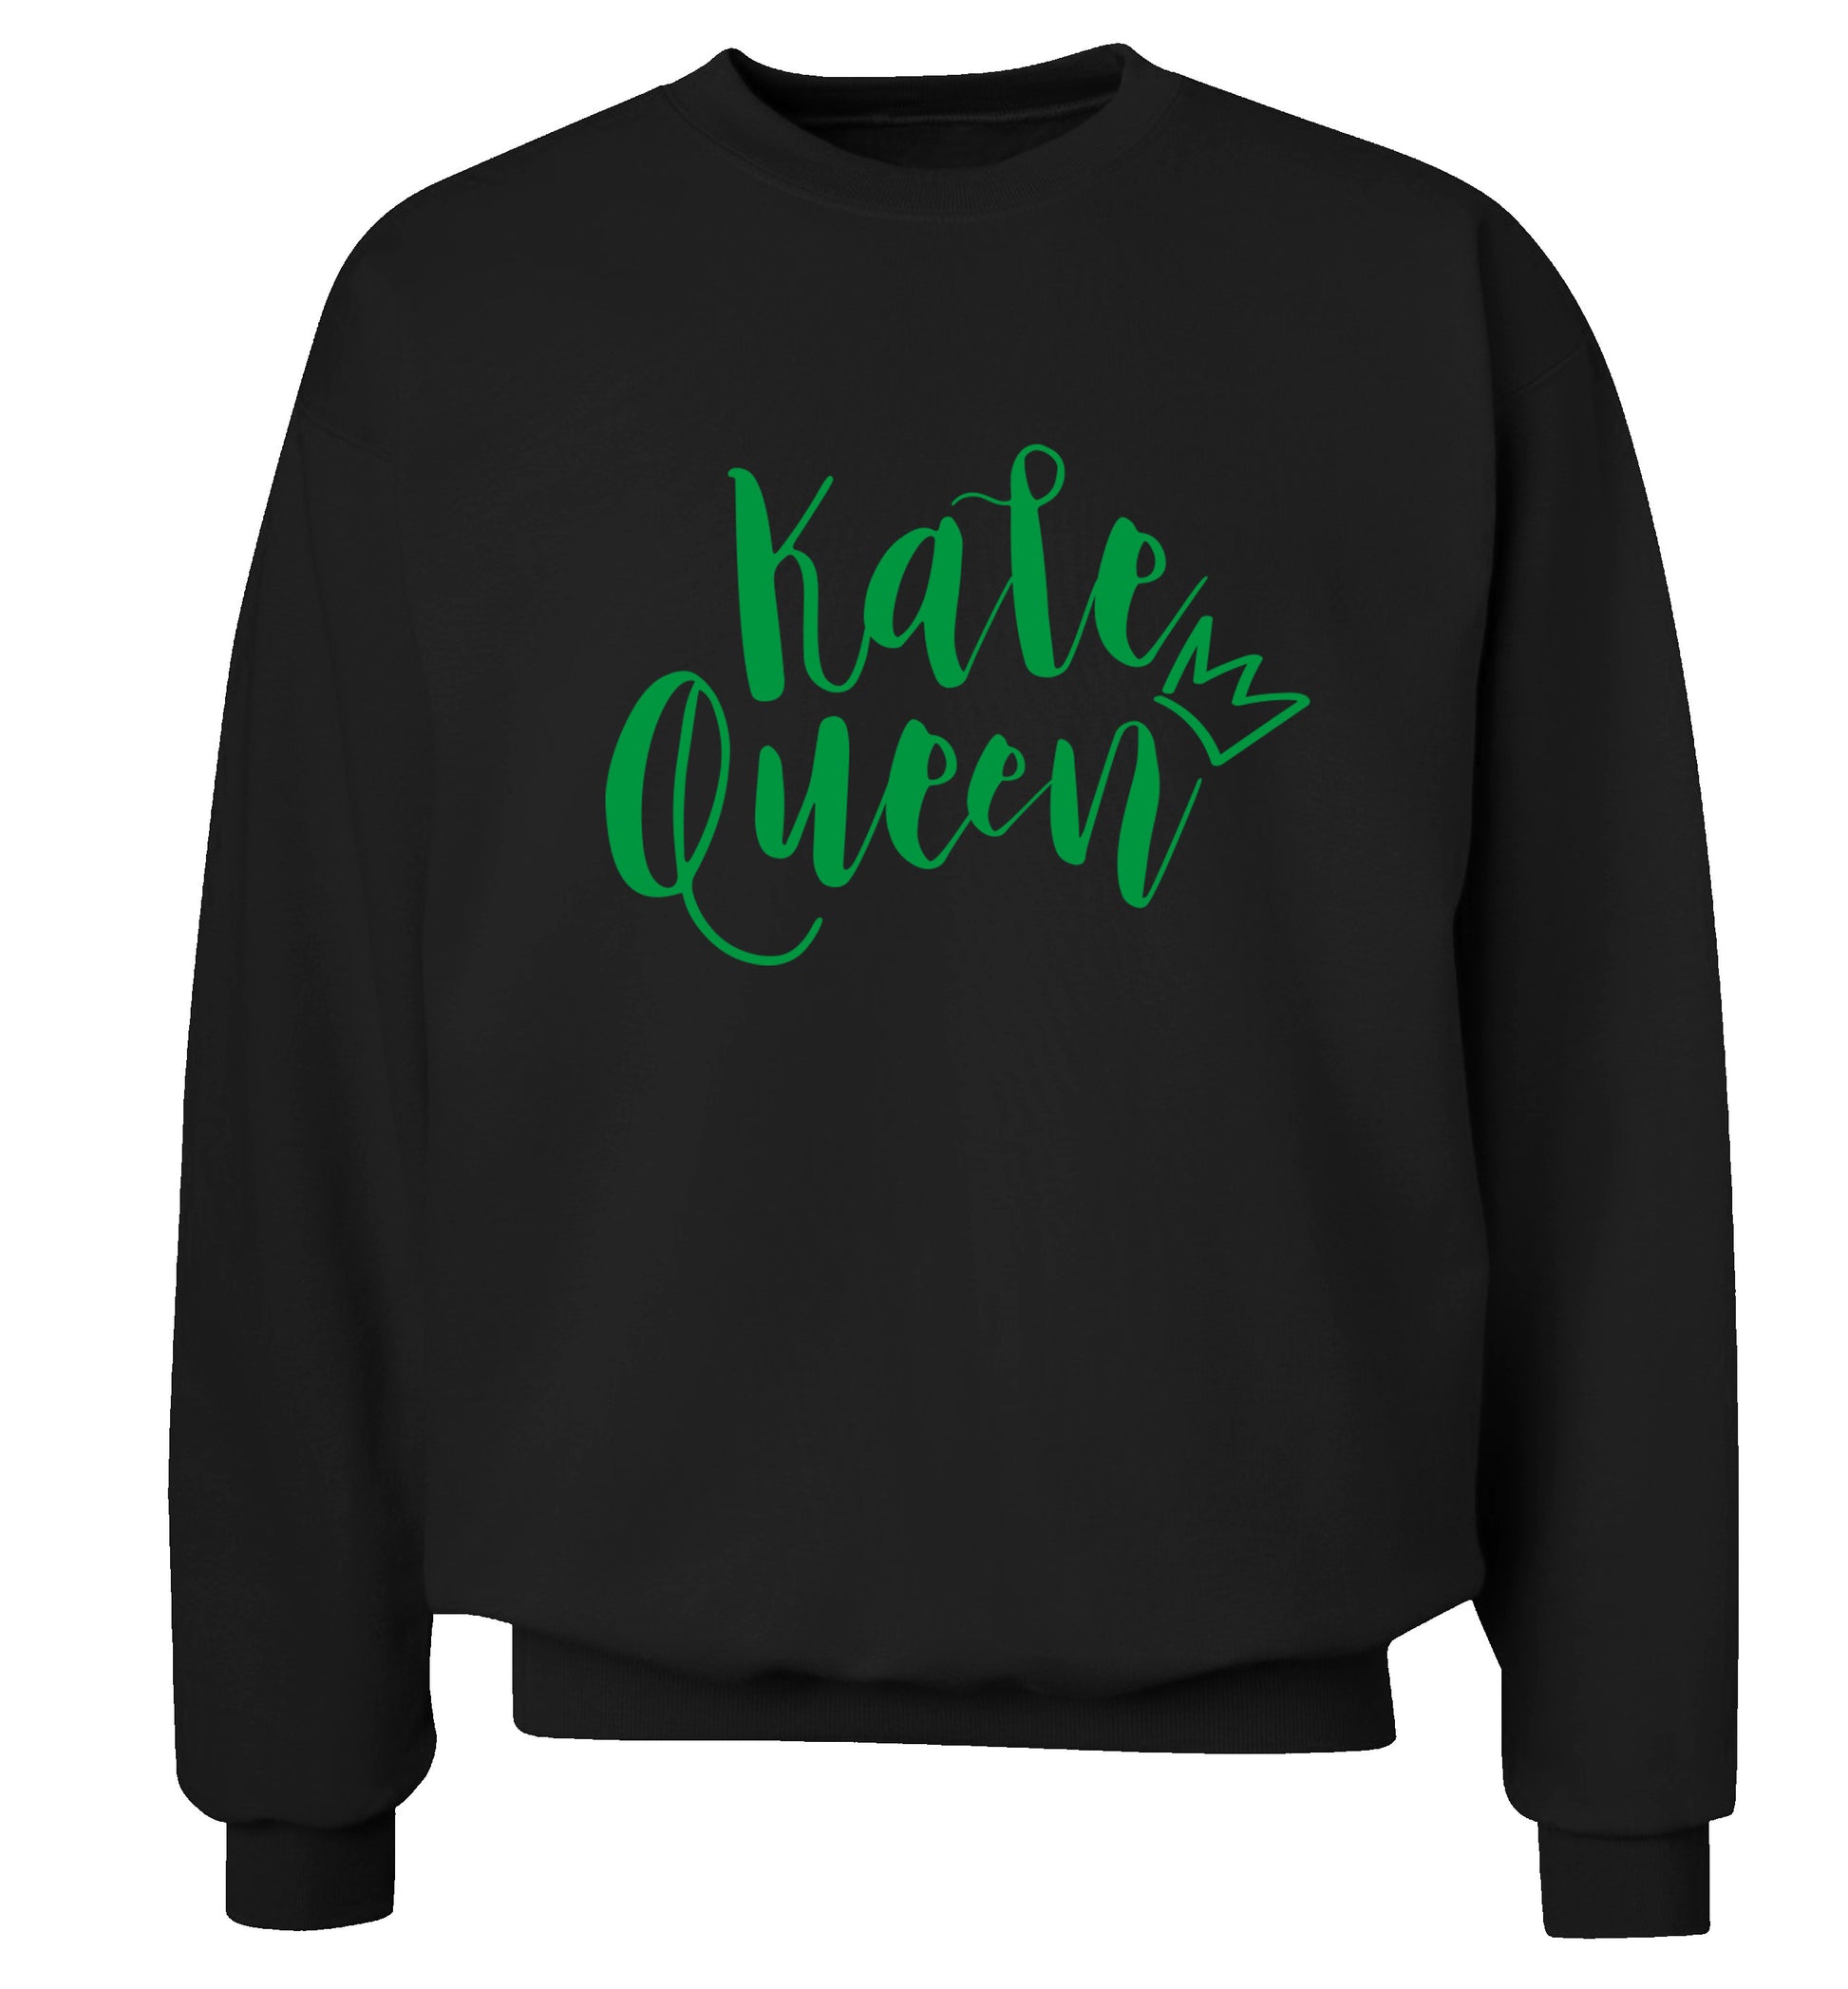 Kale Queen Adult's unisex black  sweater 2XL